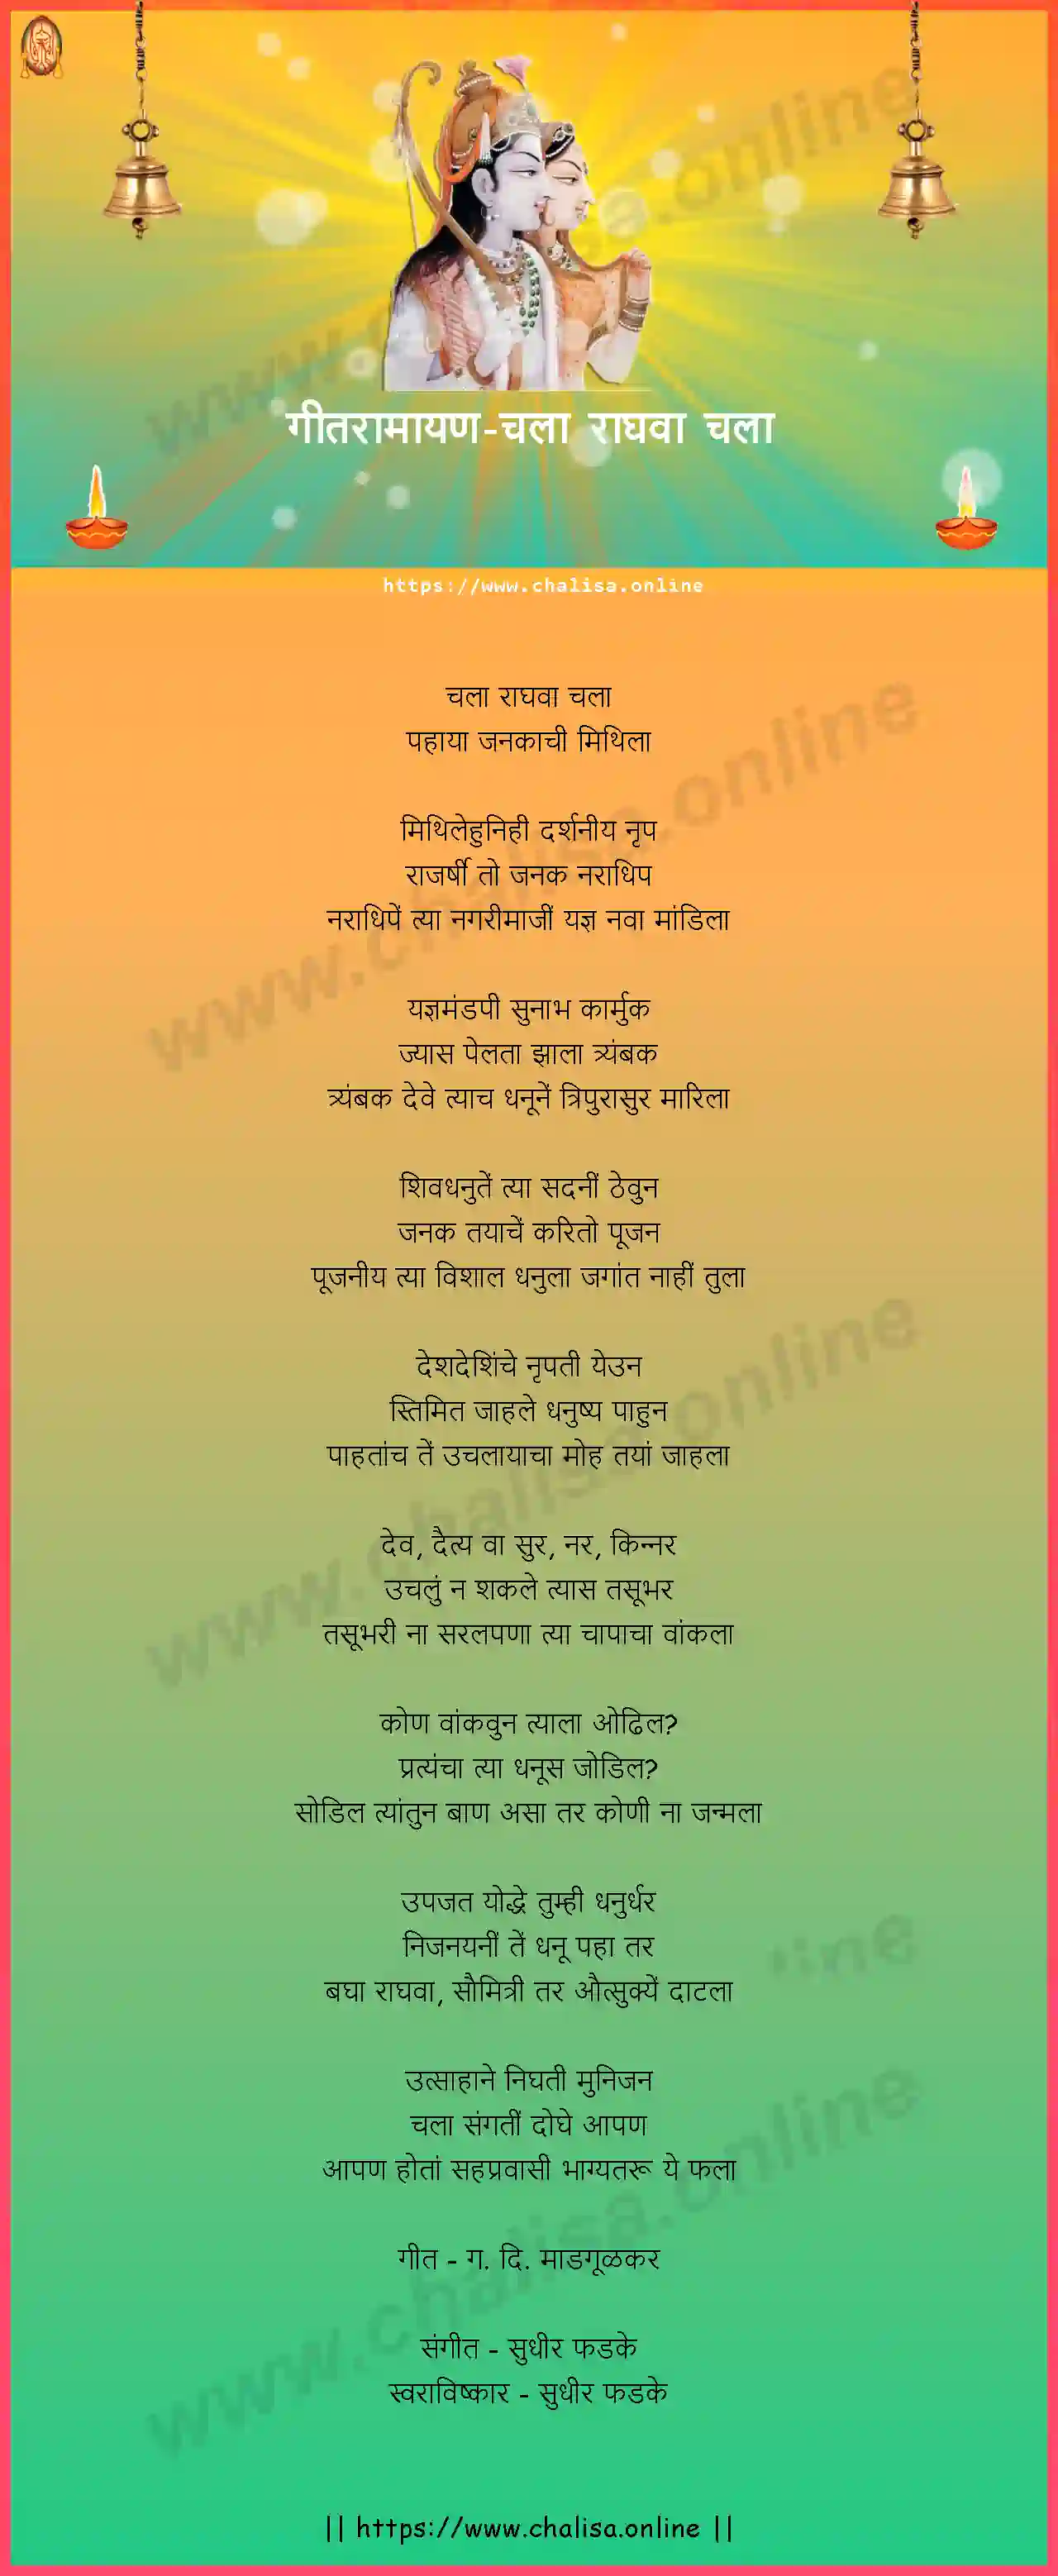 chala-raghava-chala-geet-ramayan-marathi-lyrics-download